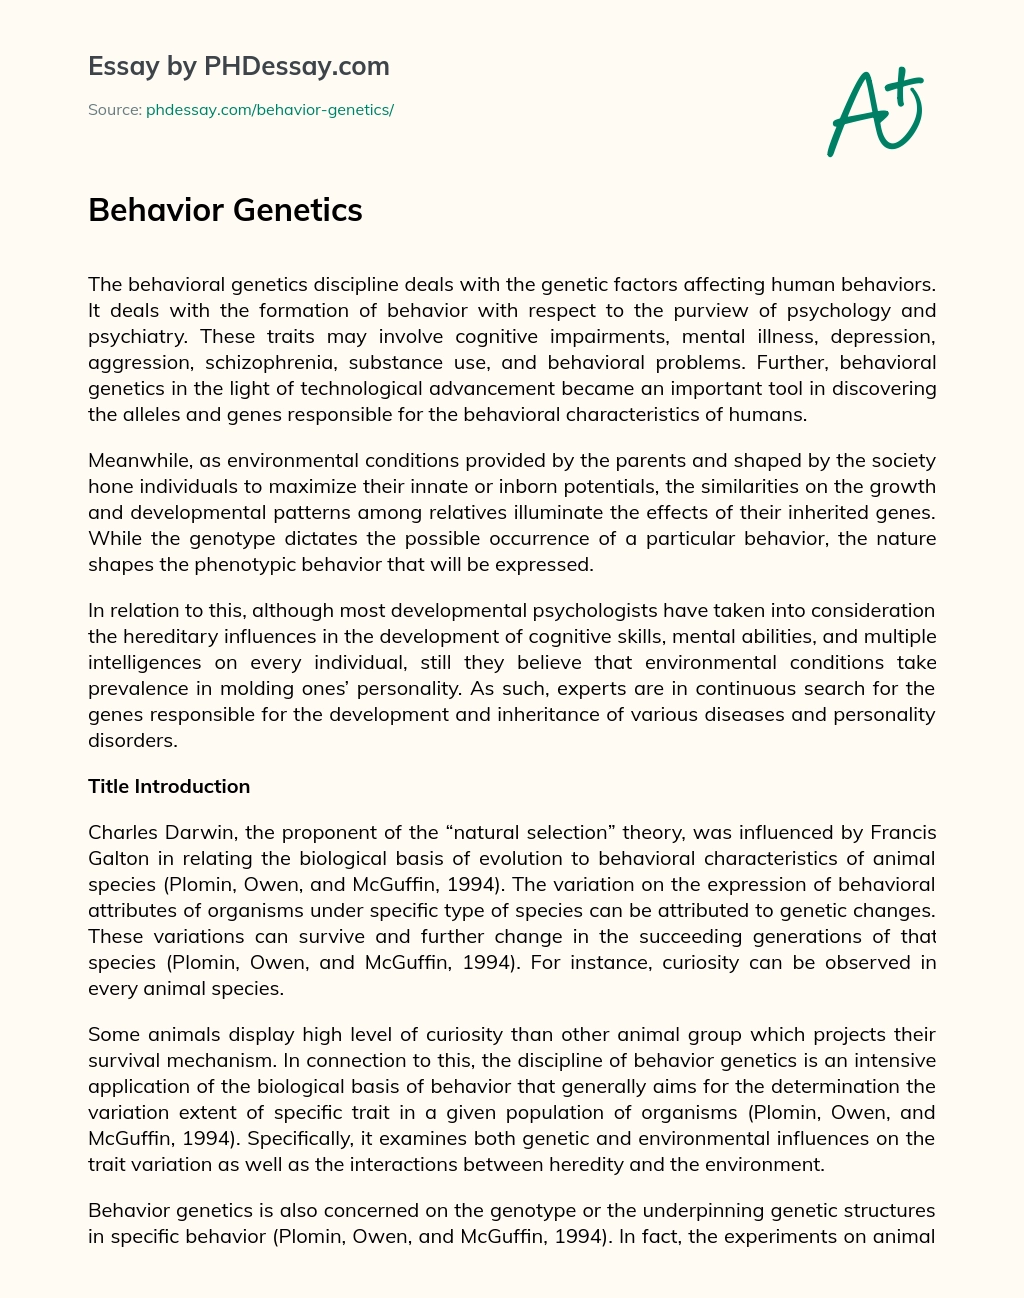 Behavior Genetics essay